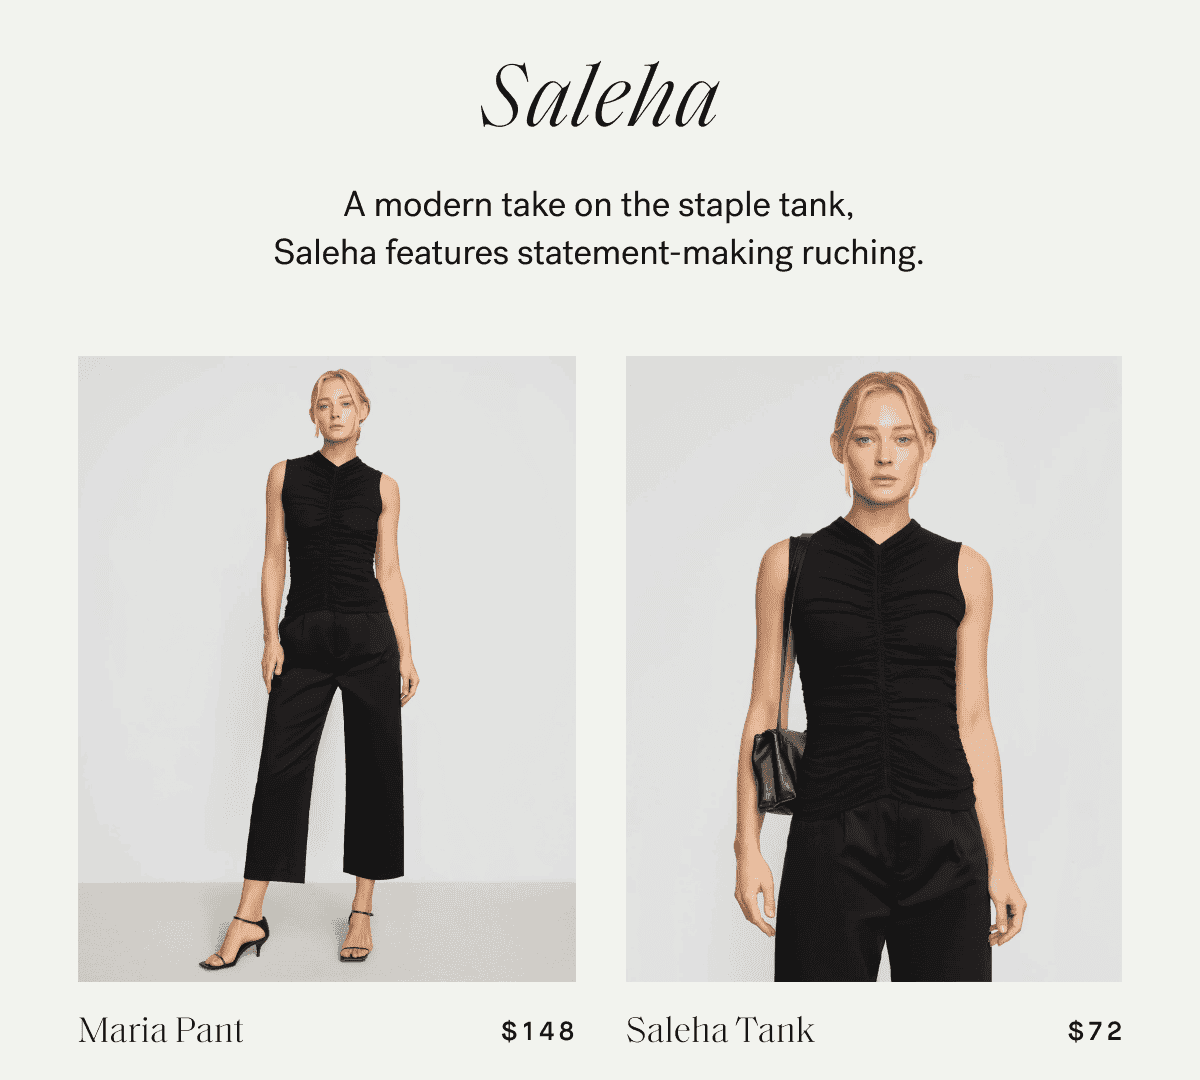 Saleha —\xa0A modern take on the staple tank, Saleha features statement-making ruching.